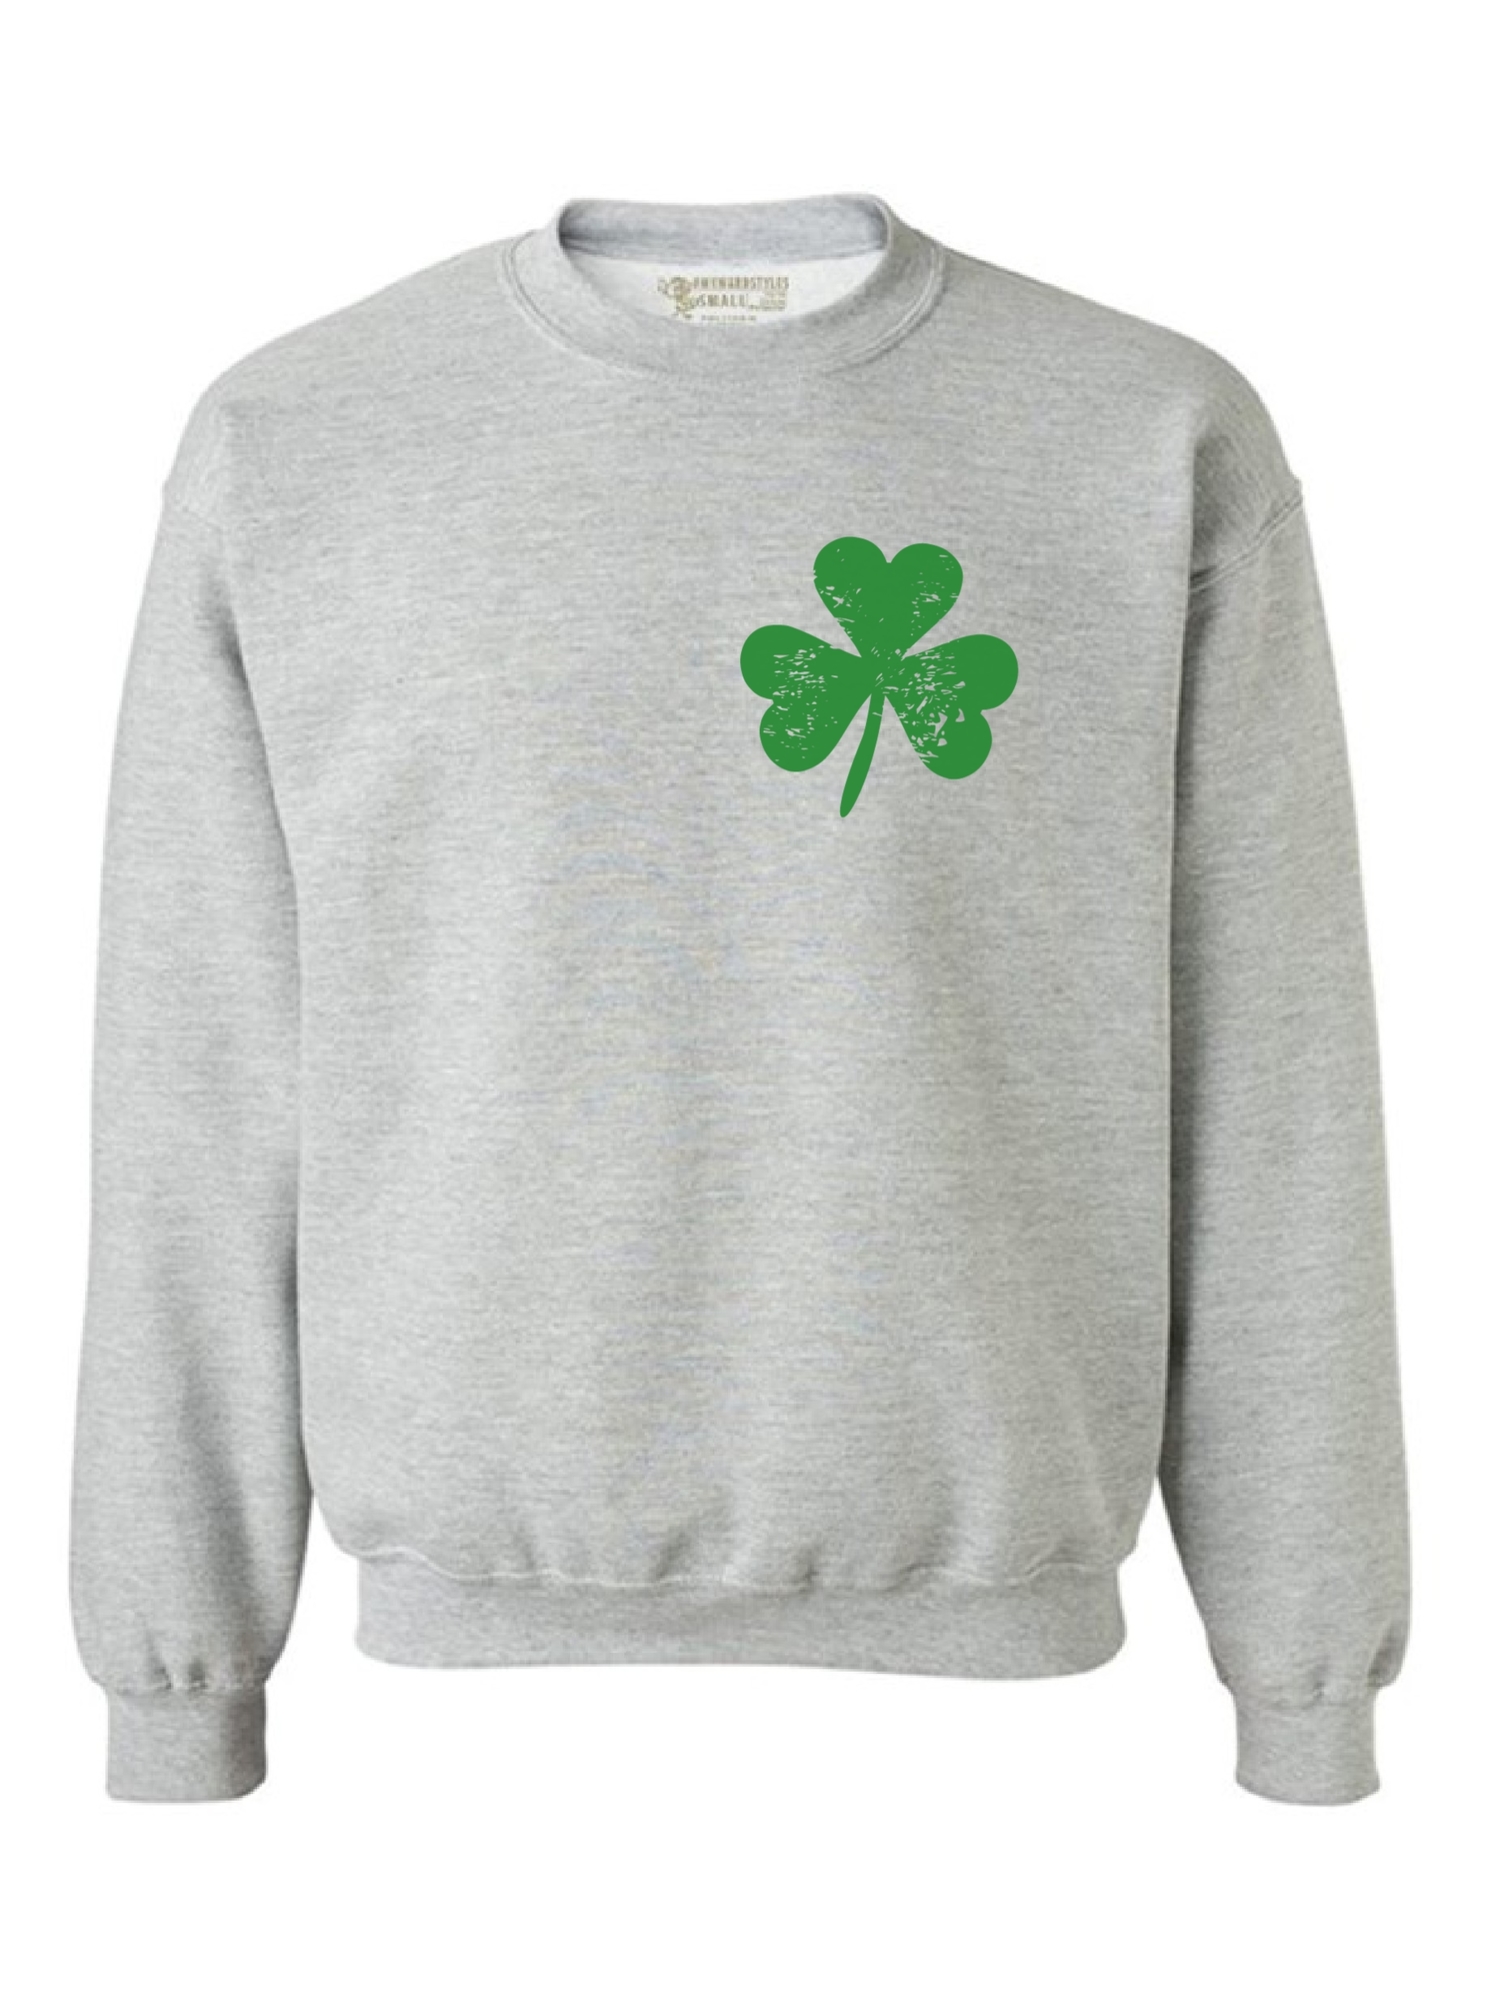 Awkward Styles St. Patricks Day Sweater Irish Clover Pocket Sweatshirt Proud Irish Sweatshirt for Men & Women Lucky Shamrock Sweater St Paddy's Day Irish Gifts Irish Pride St Patricks Sweater - image 1 of 5